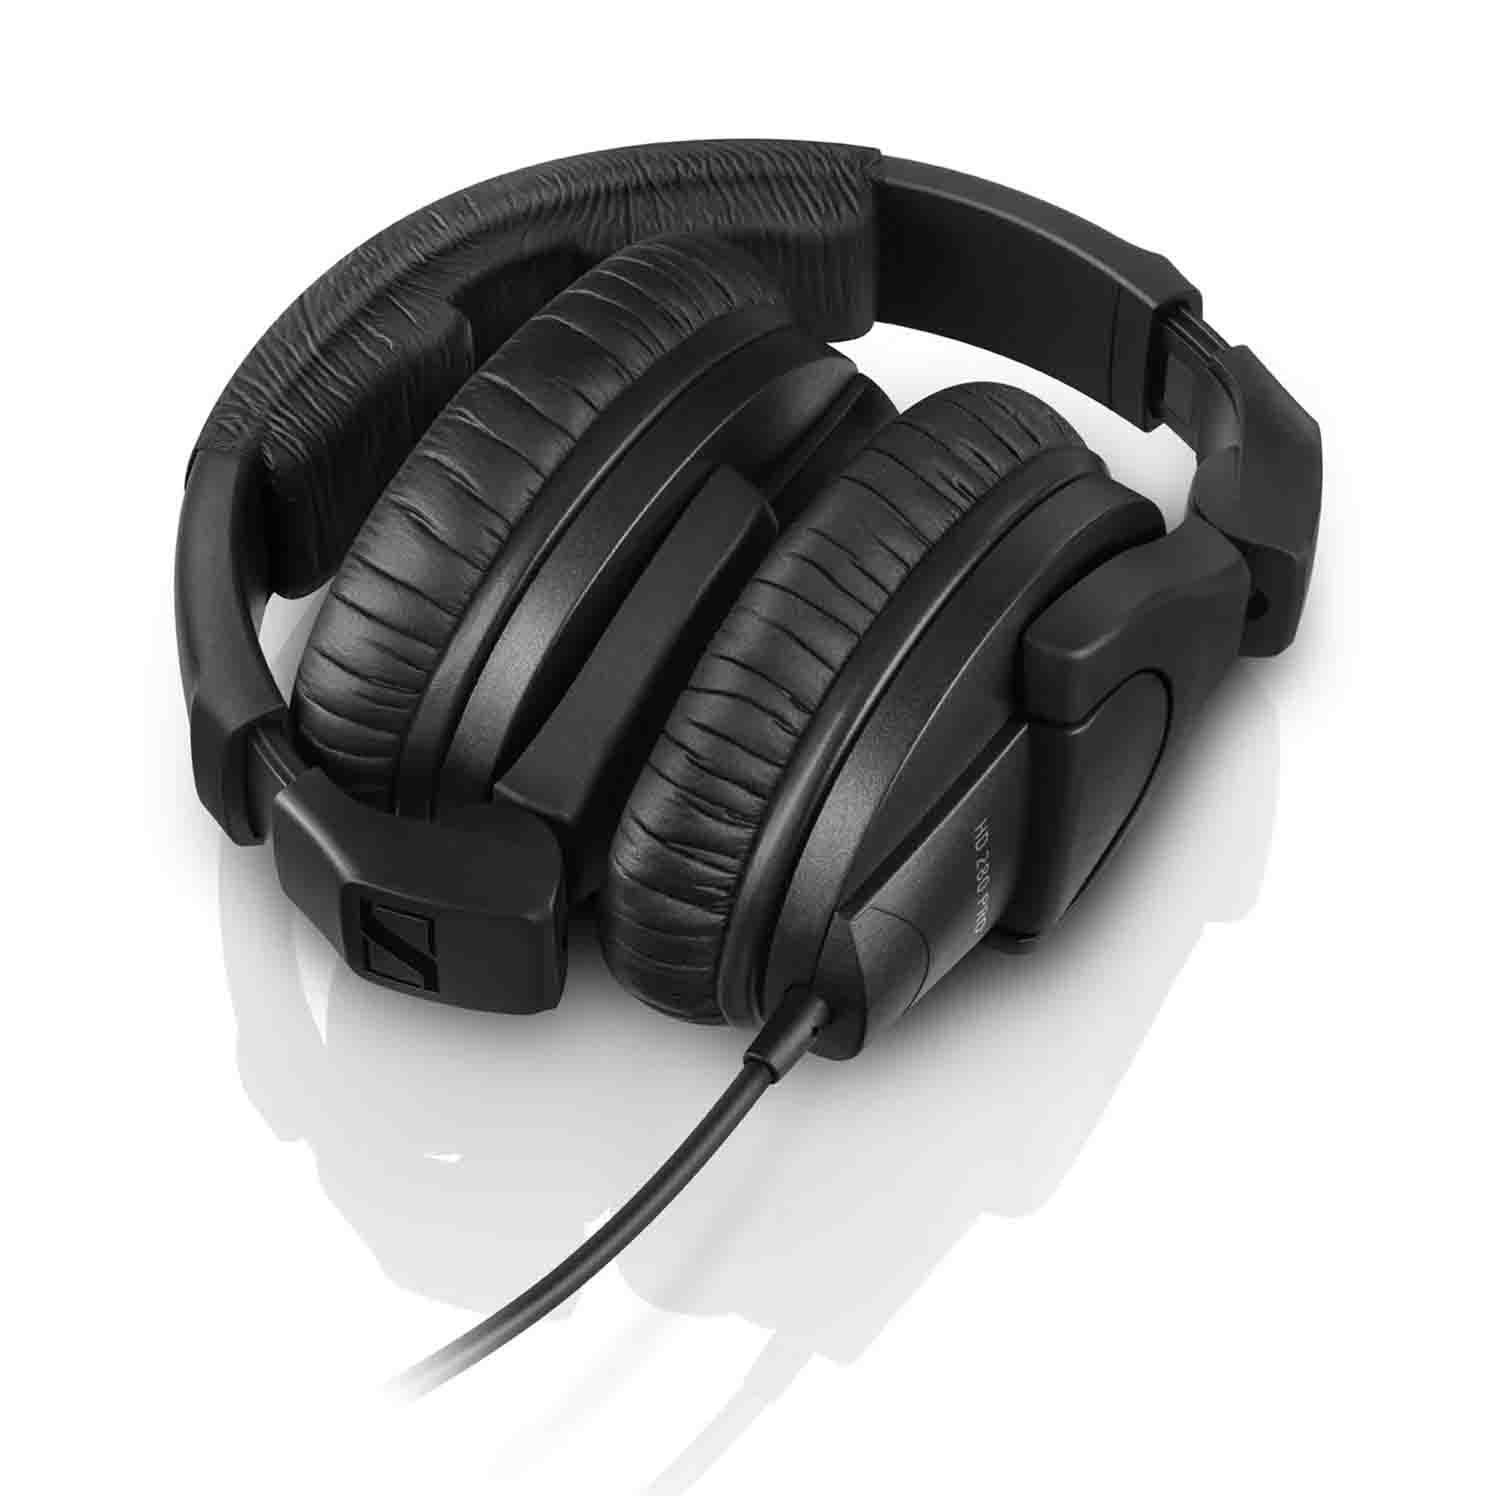 Sennheiser HD 280 PRO, Closed-Back Monitor Headphones - Hollywood DJ